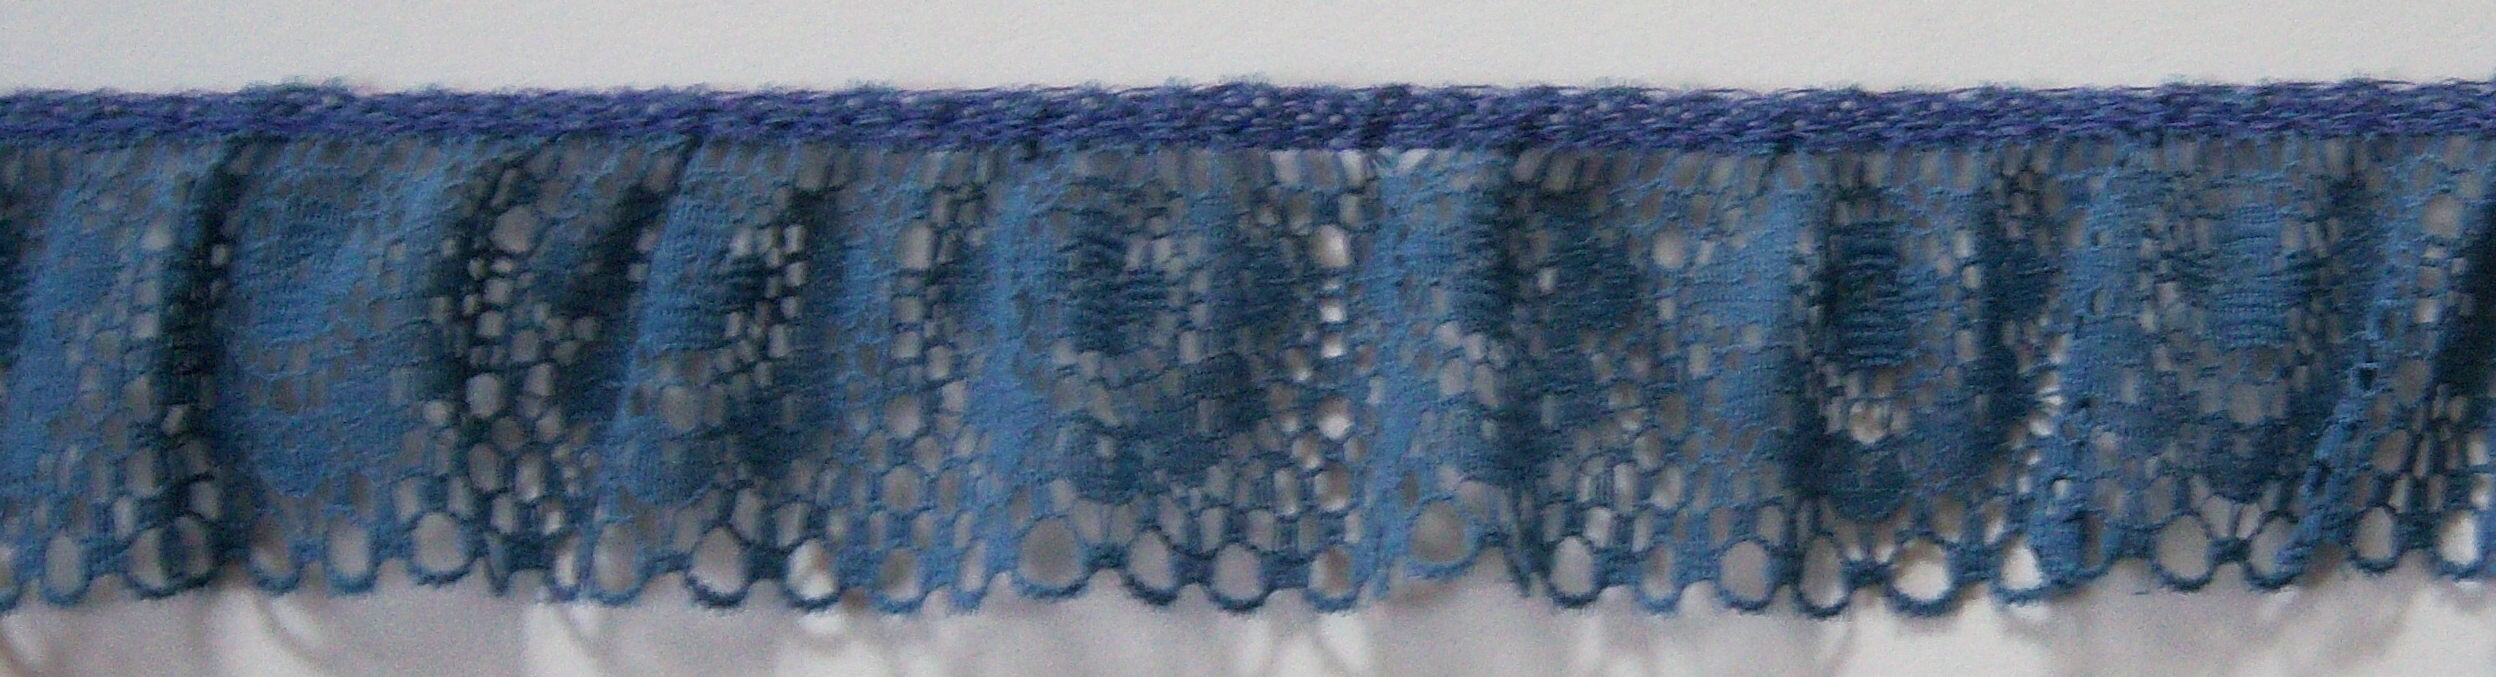 Slate 1 1/2" Ruffled Lace